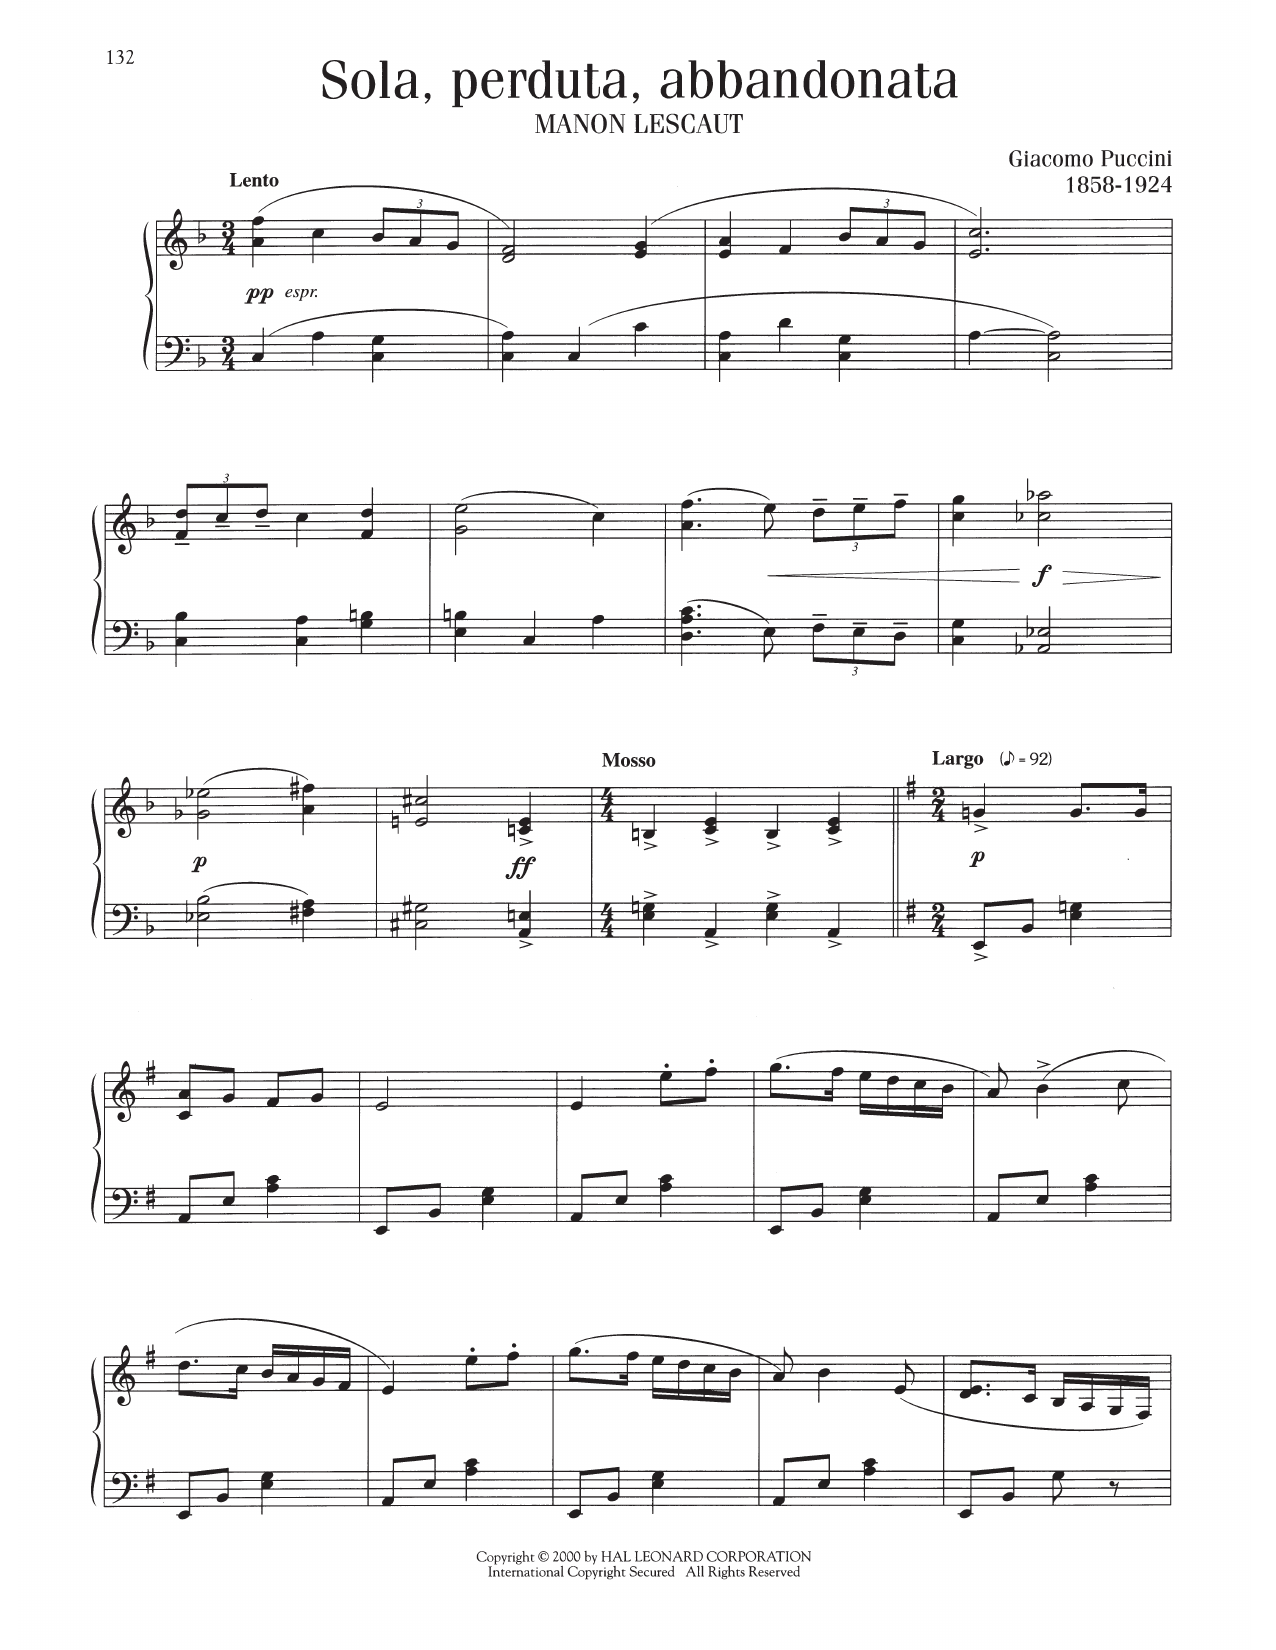 Download Giacomo Puccini Sola, Perduta, Abbandonata Sheet Music and learn how to play Piano Solo PDF digital score in minutes